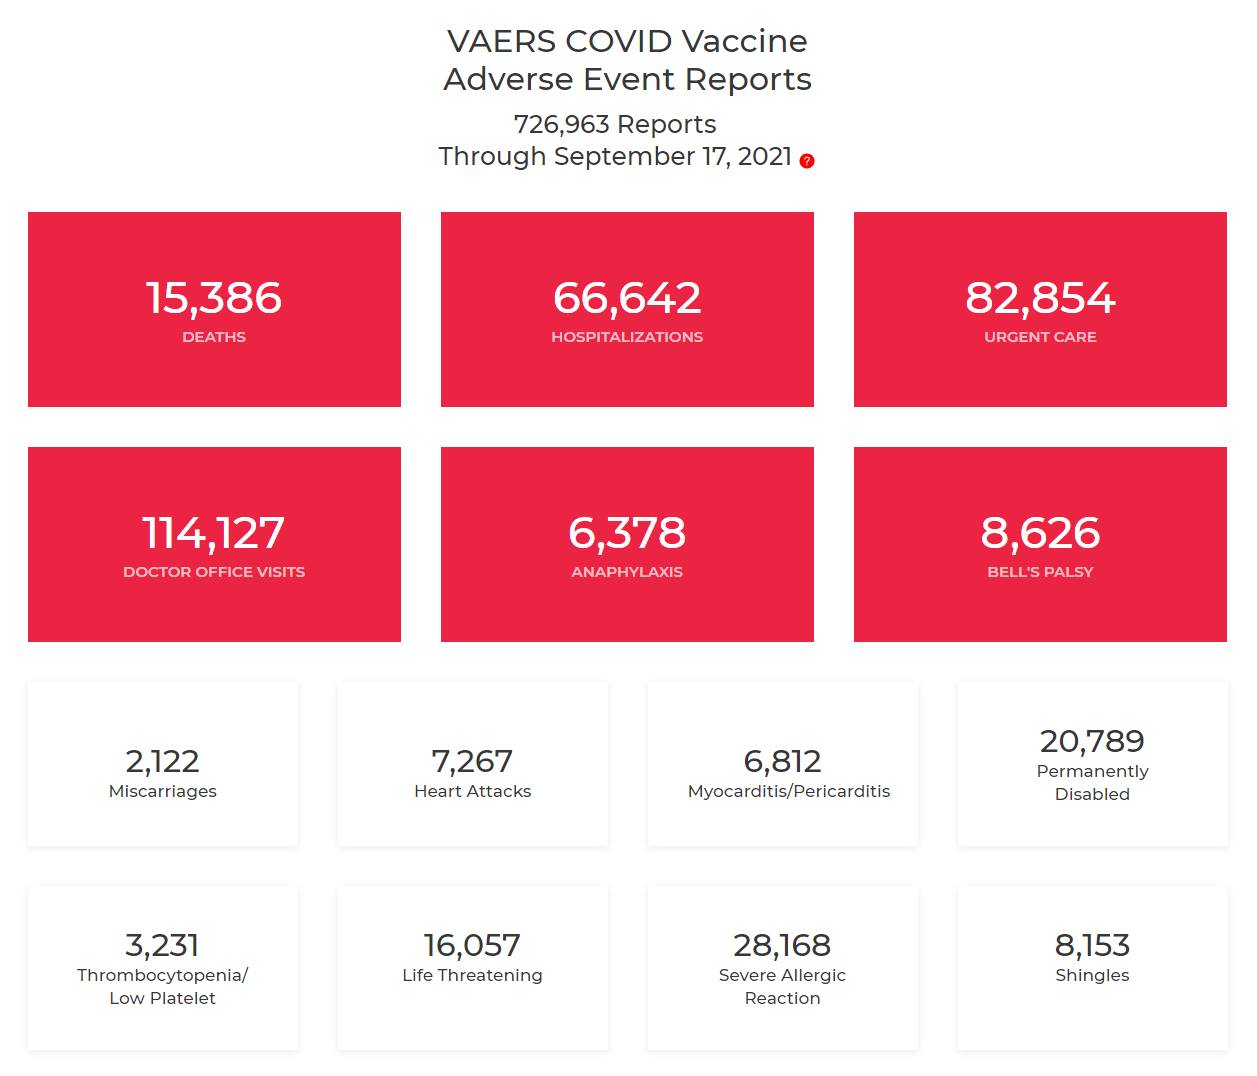 VAERS COVID Vaccine Data through September 17, 2021